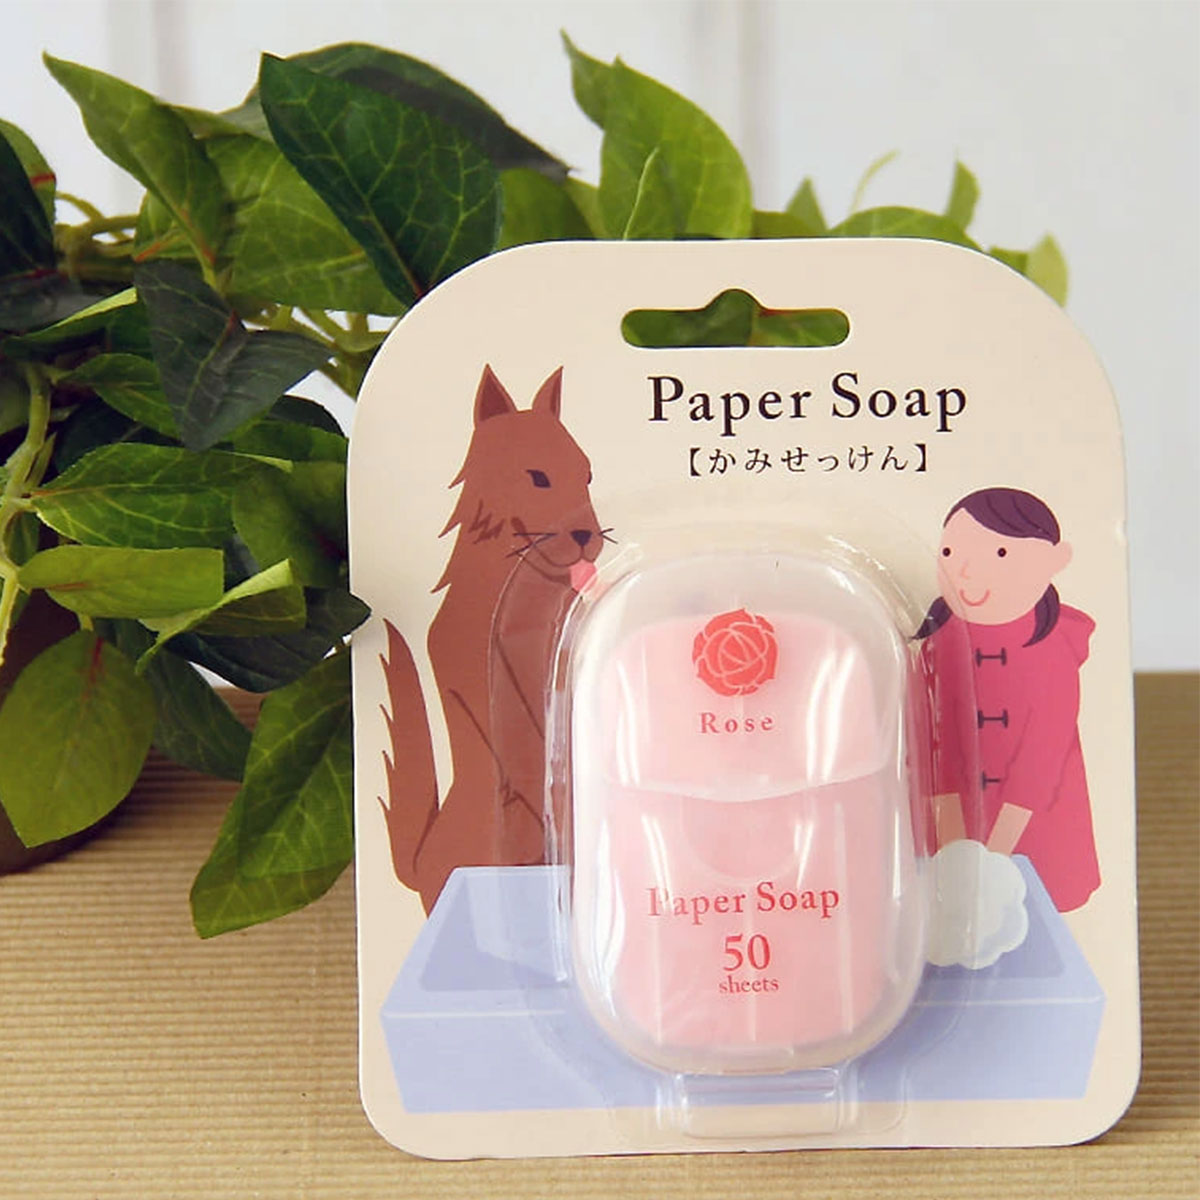 Paper Soap #Rose 50 Sheets